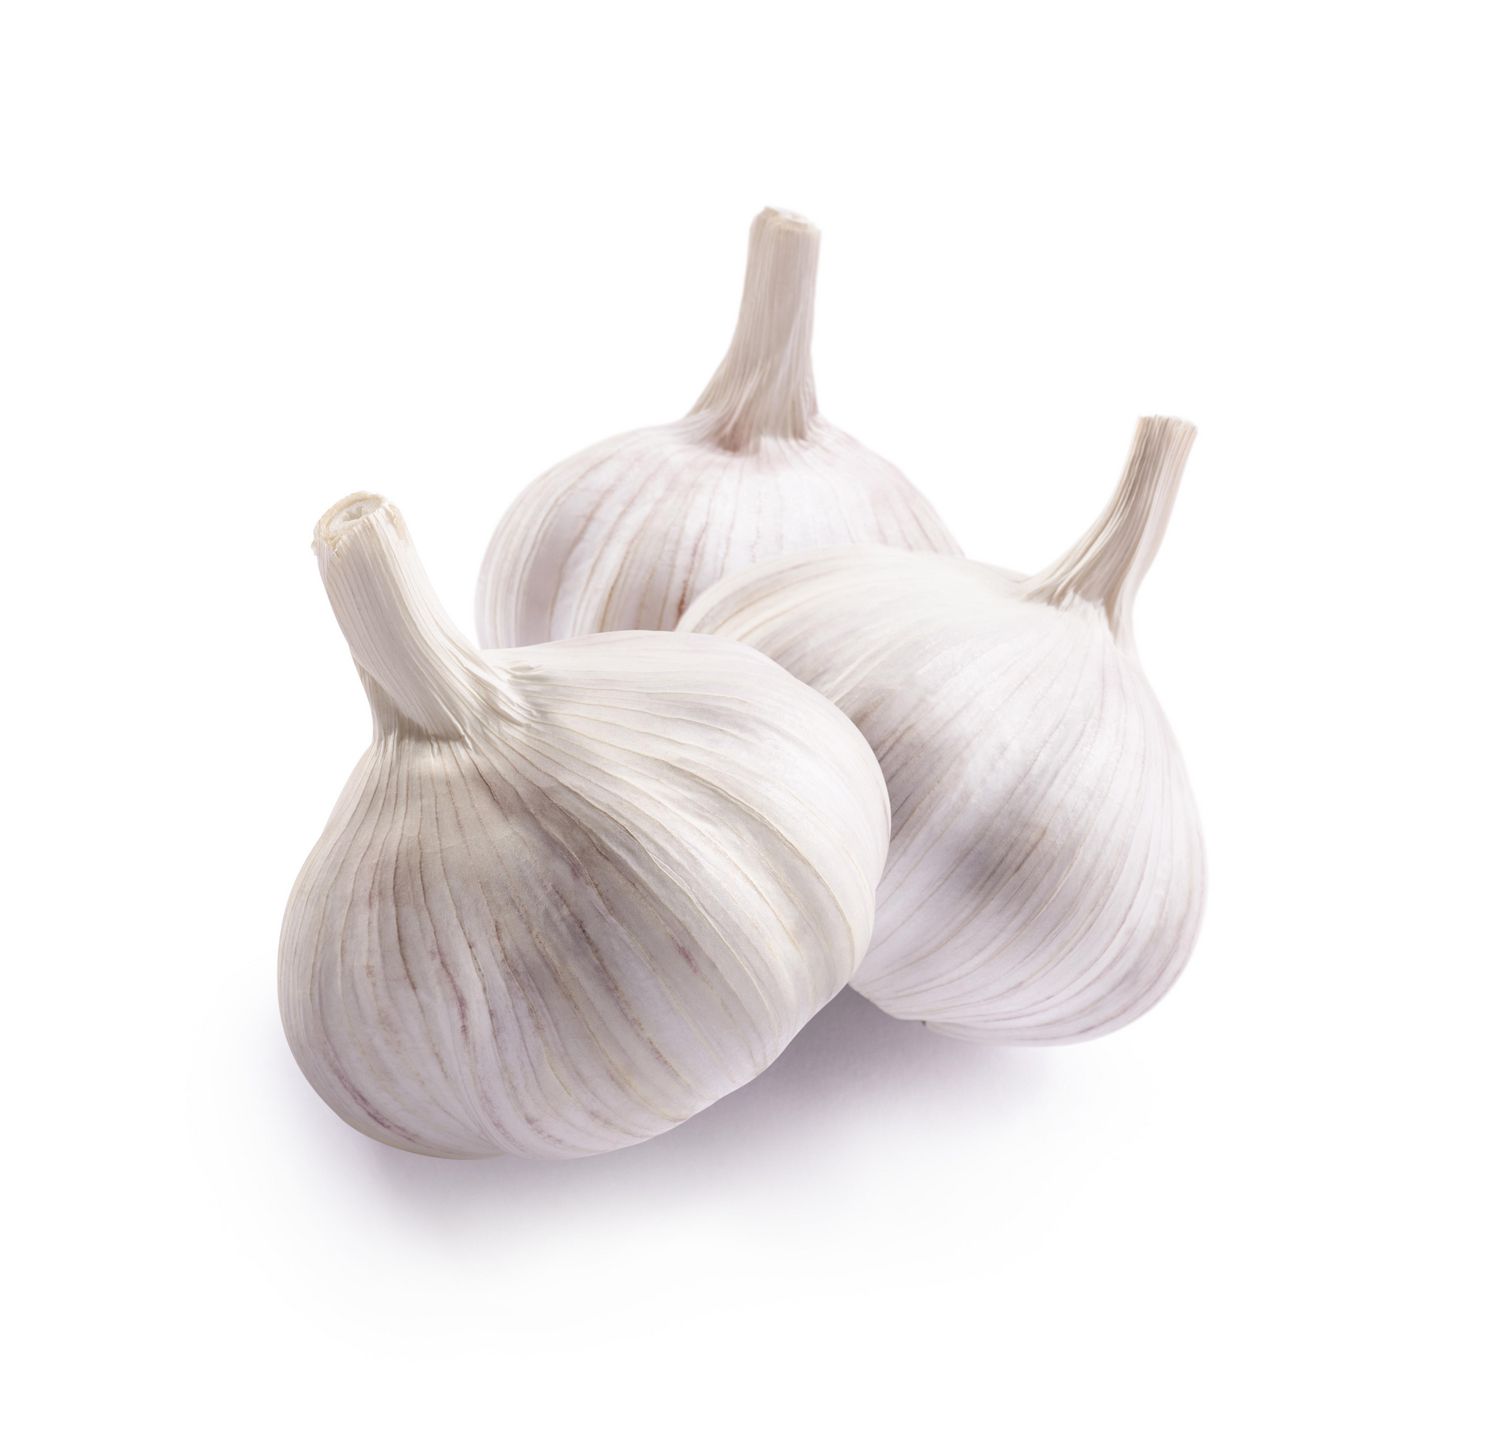 Imported Garlic White Organic 3X (Each)